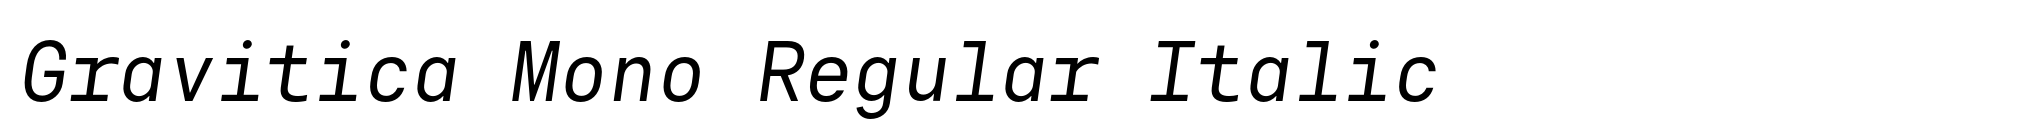 Gravitica Mono Regular Italic image